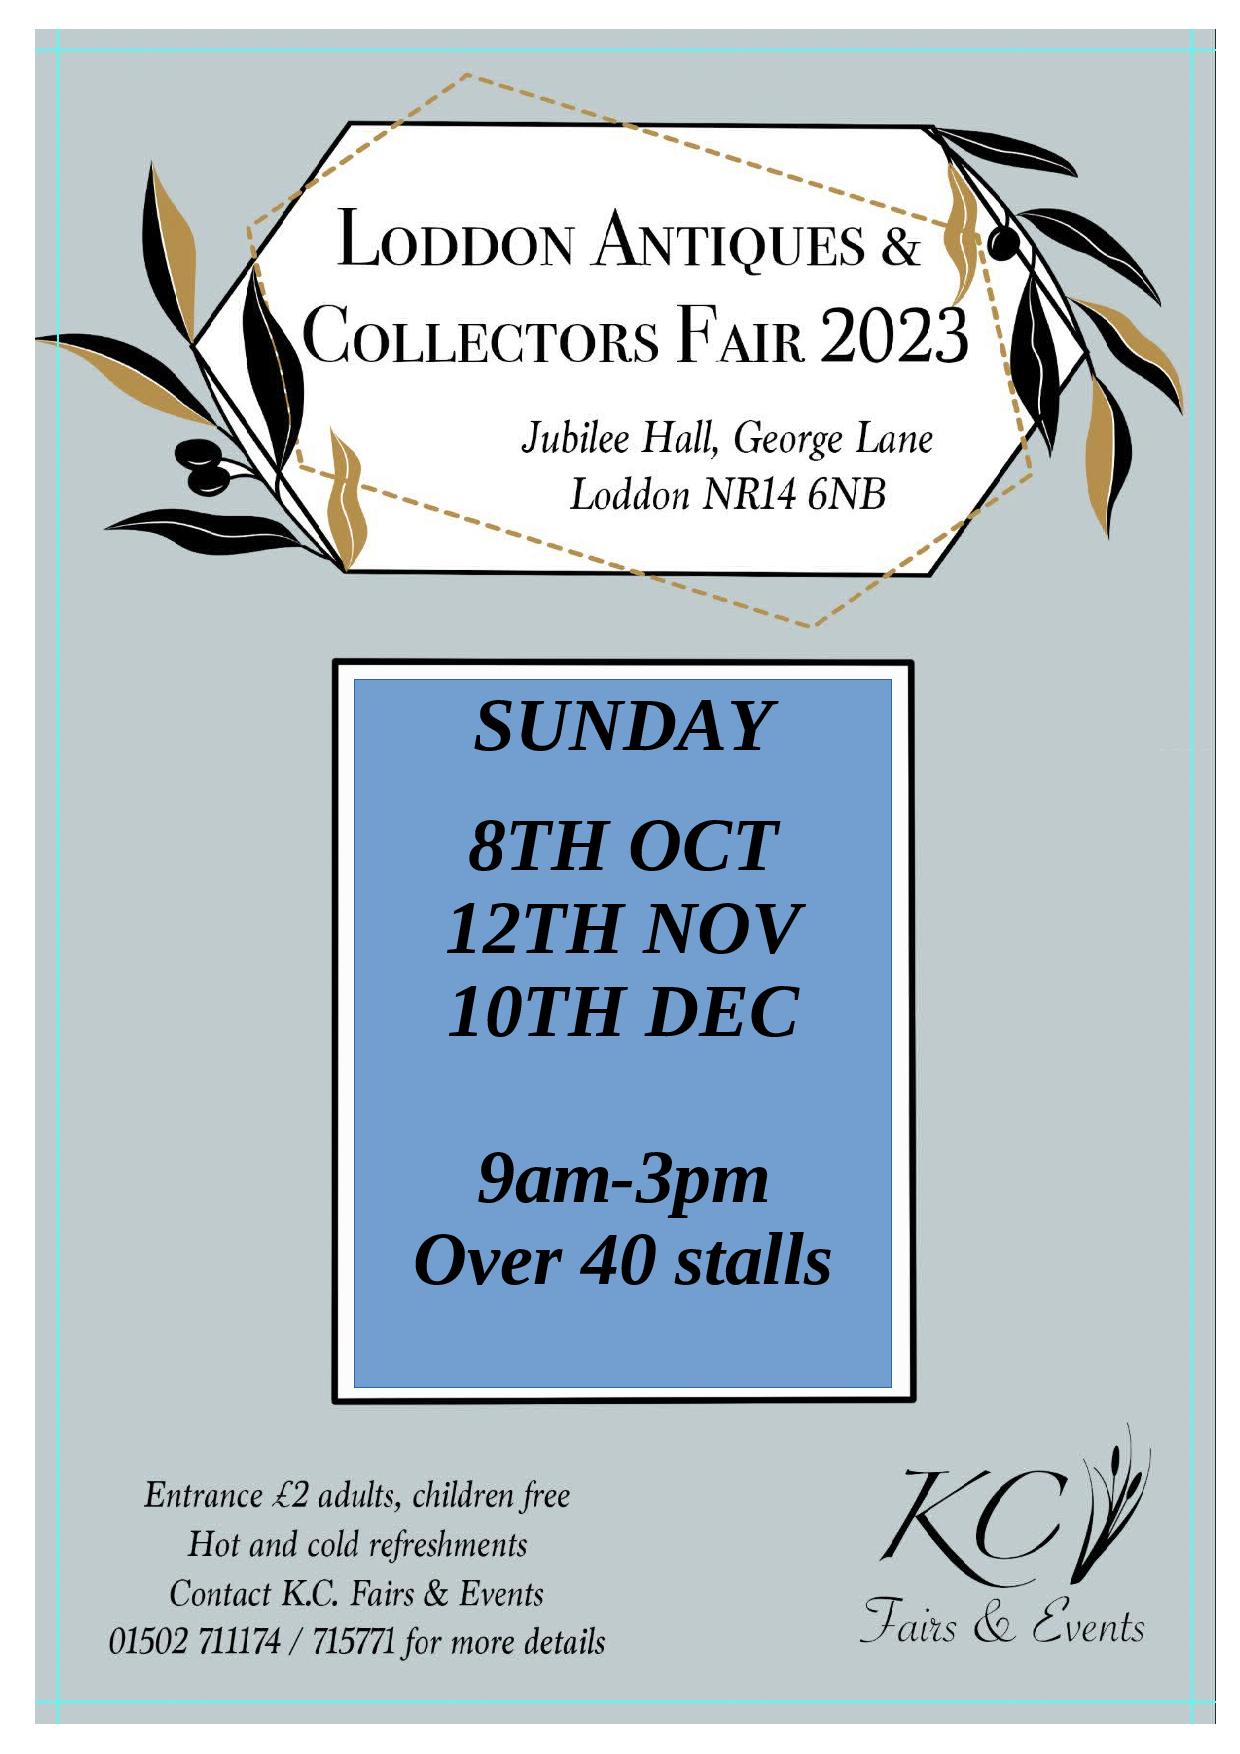 Loddon Antiques & Collectors Fair – Loddon Jubilee Hall, 10th December